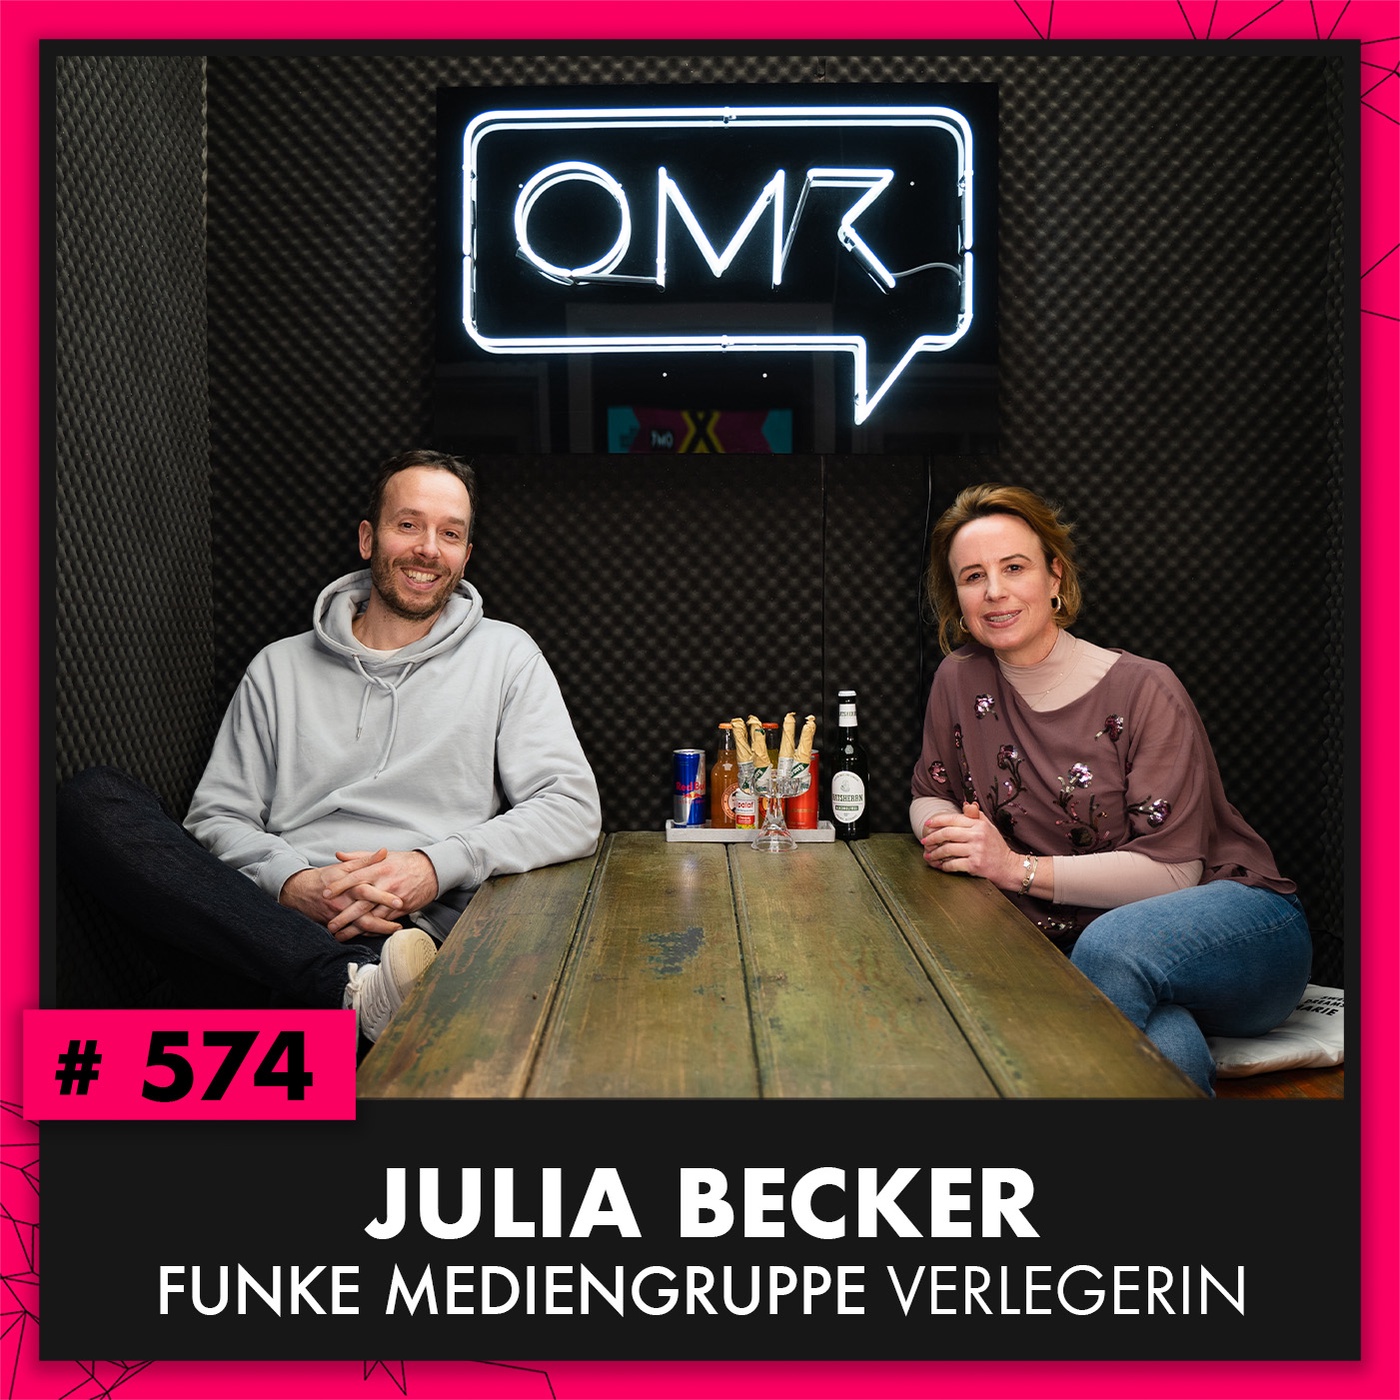 OMR #574 mit Funke-Verlegerin Julia Becker